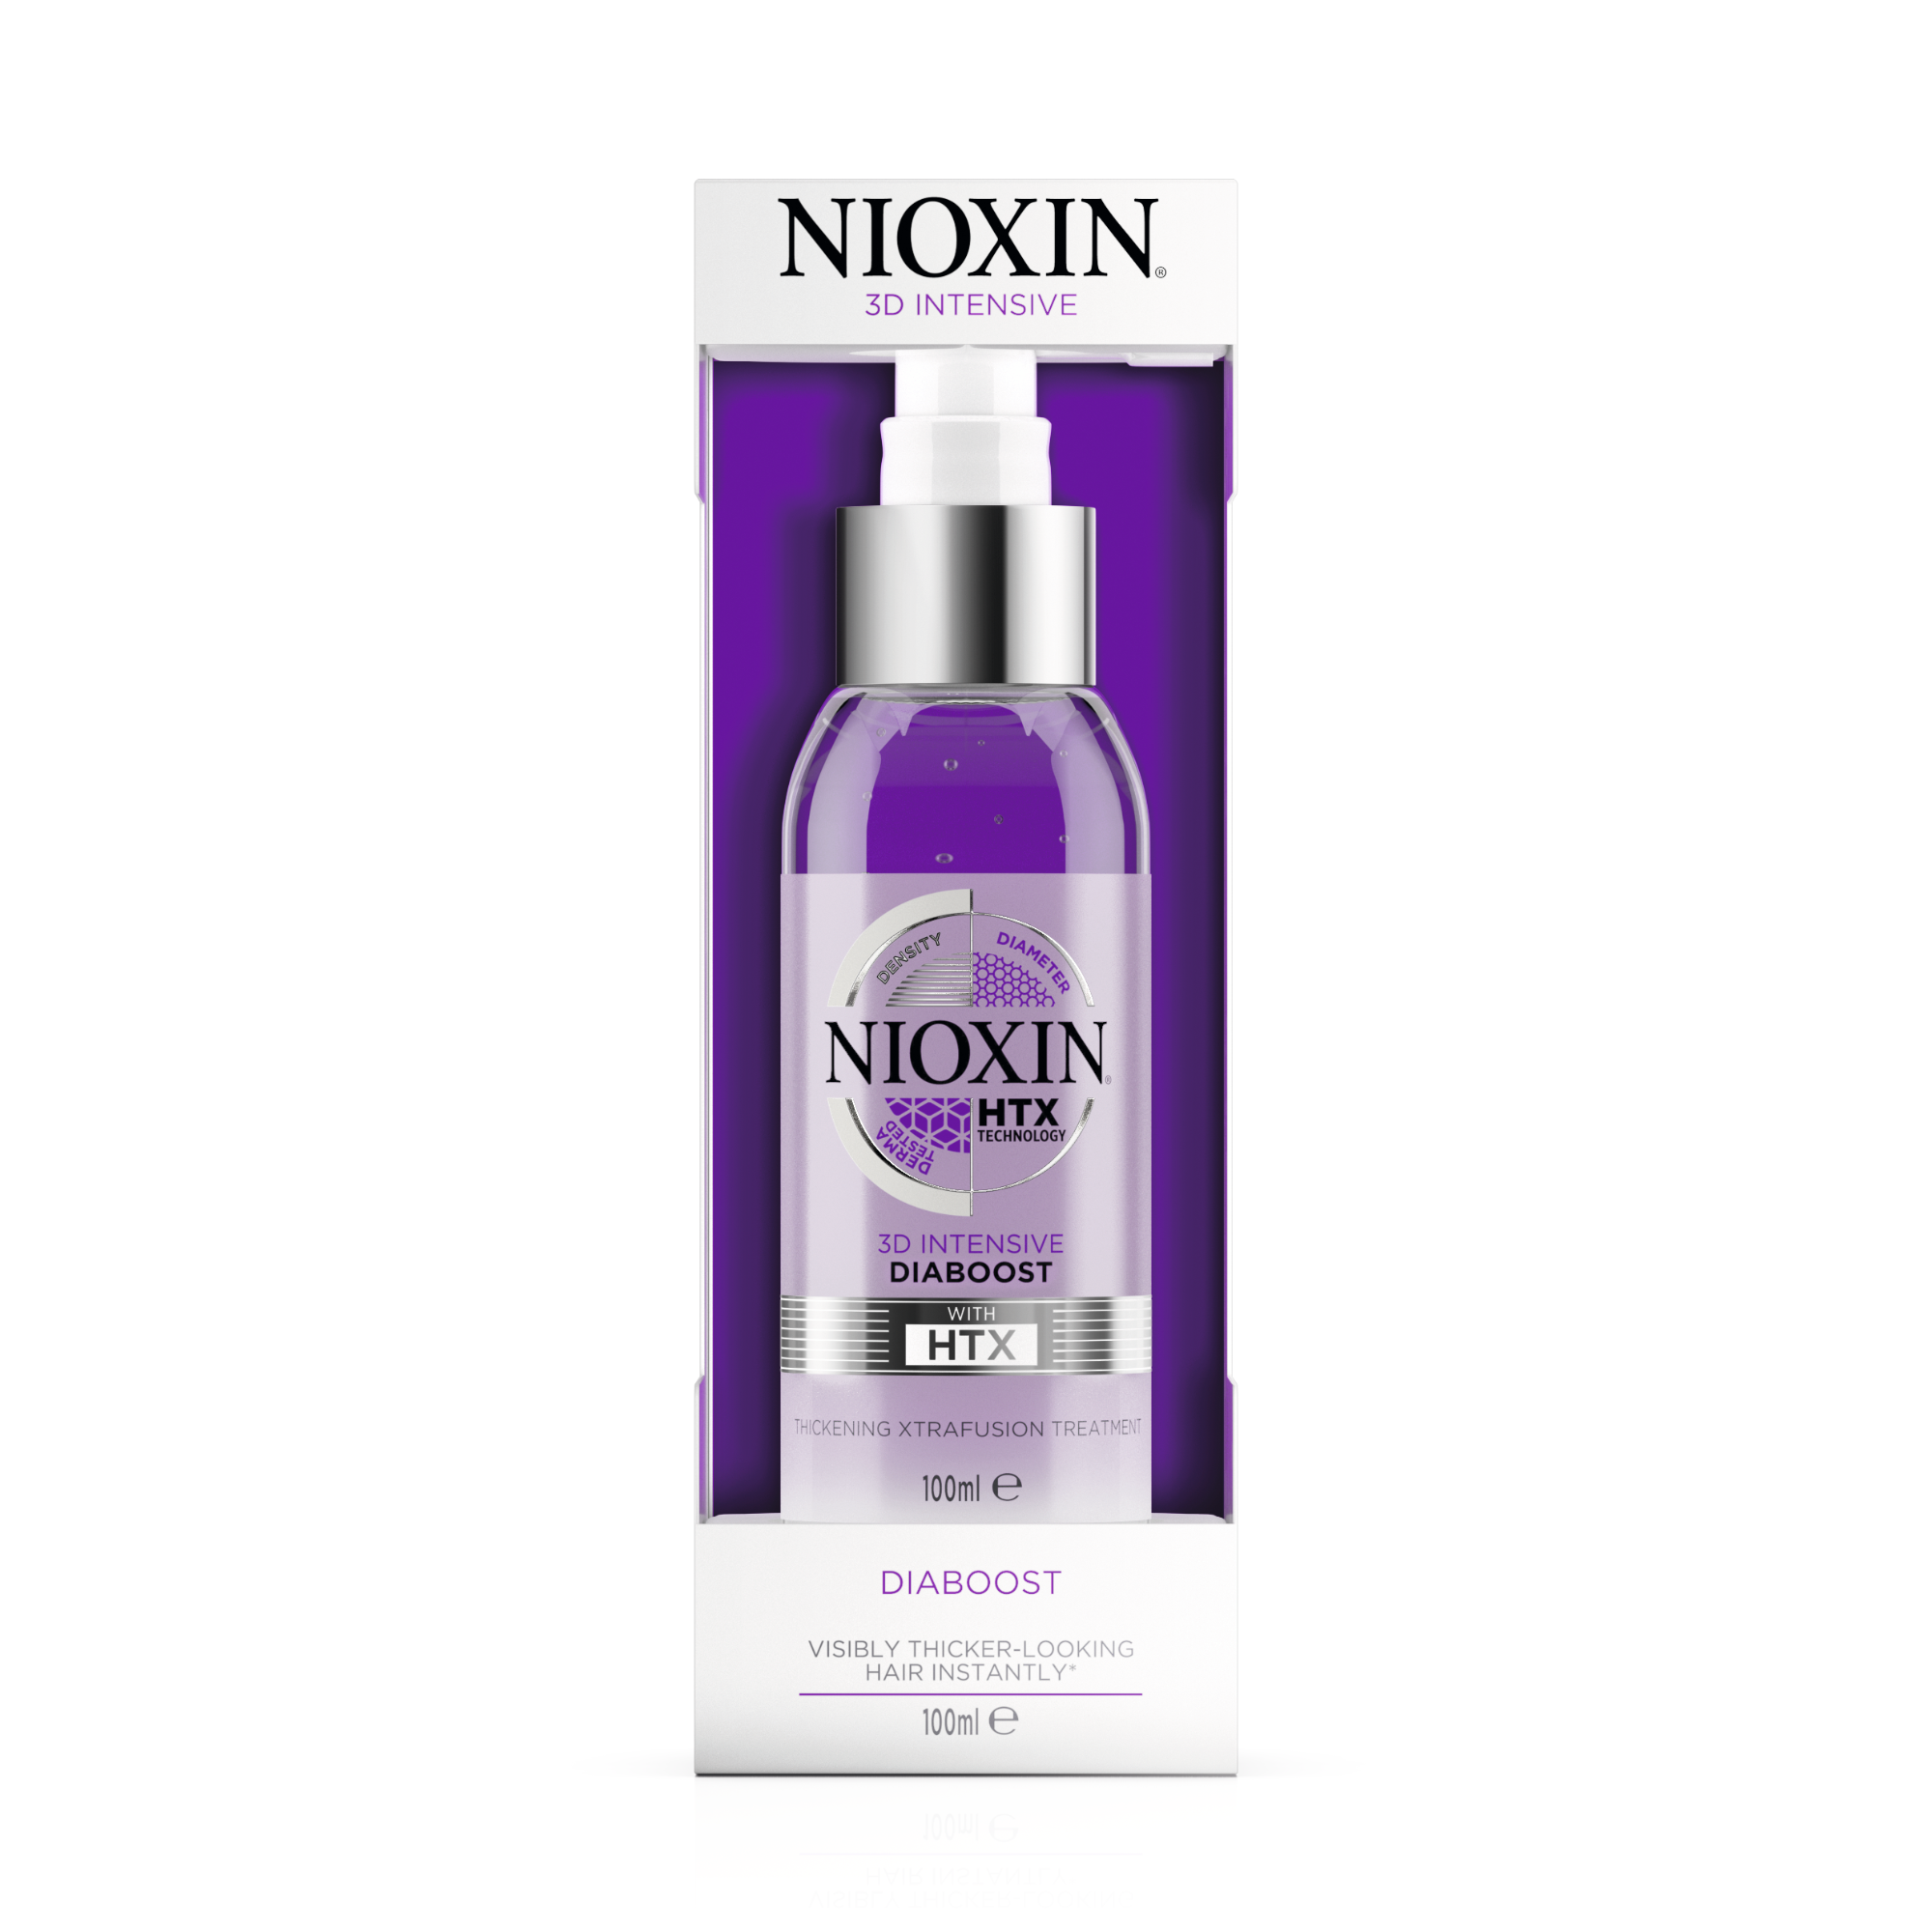 Nioxin 3D Intensive Diaboost 100 ML